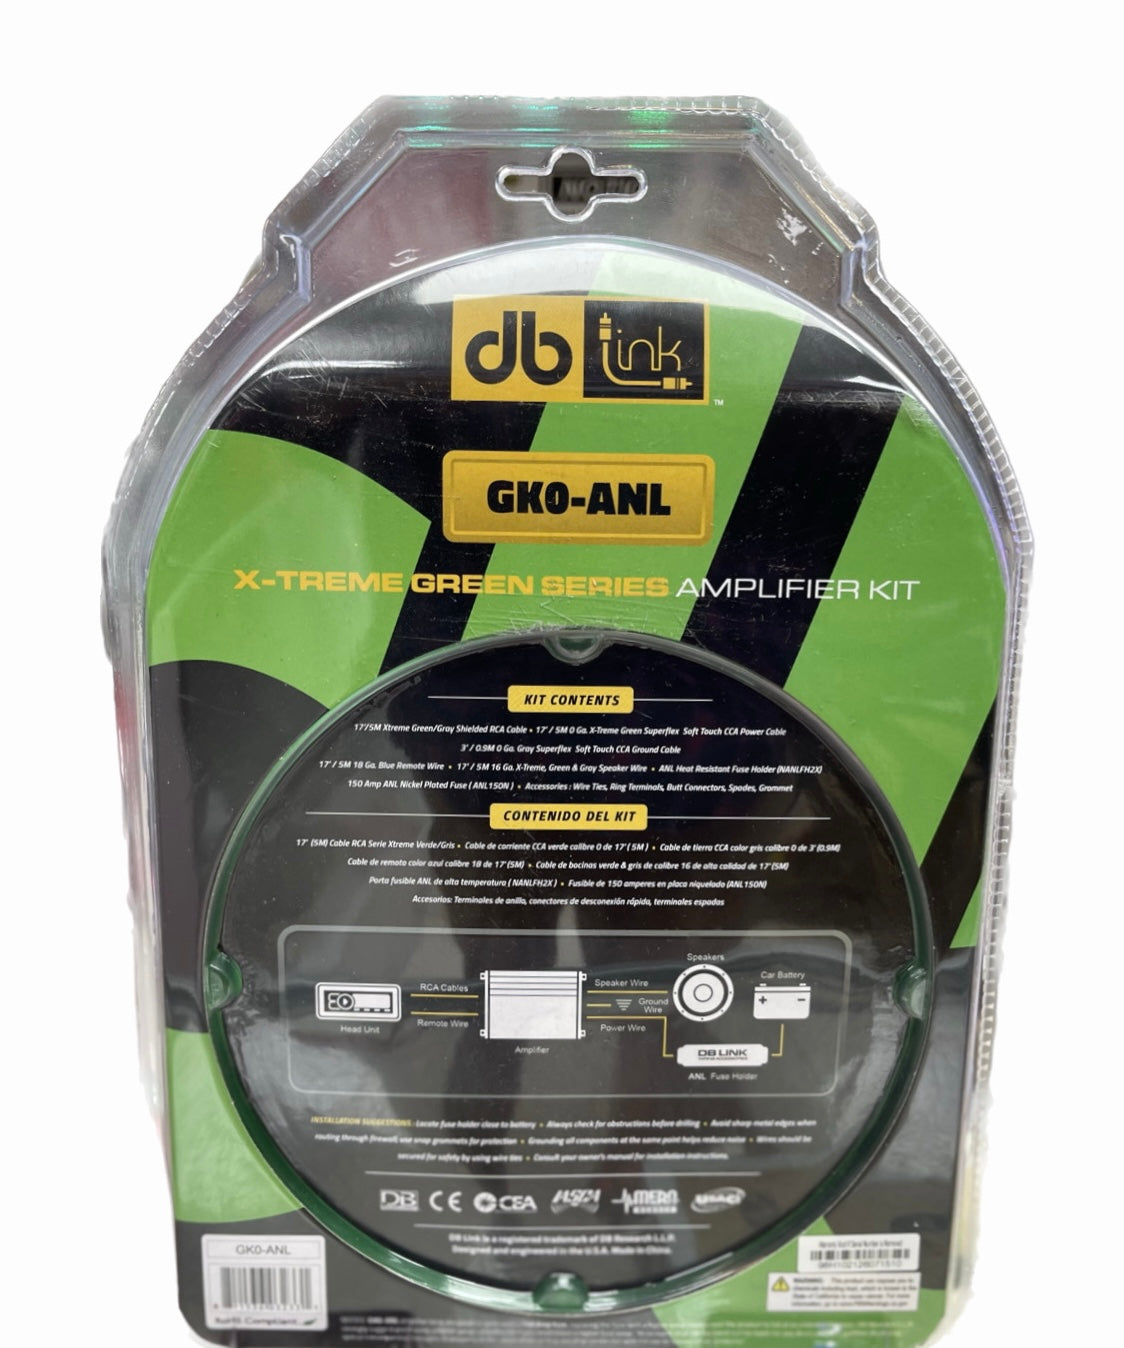 DB Link Amp Kit 0GA ANL Xtreme Green